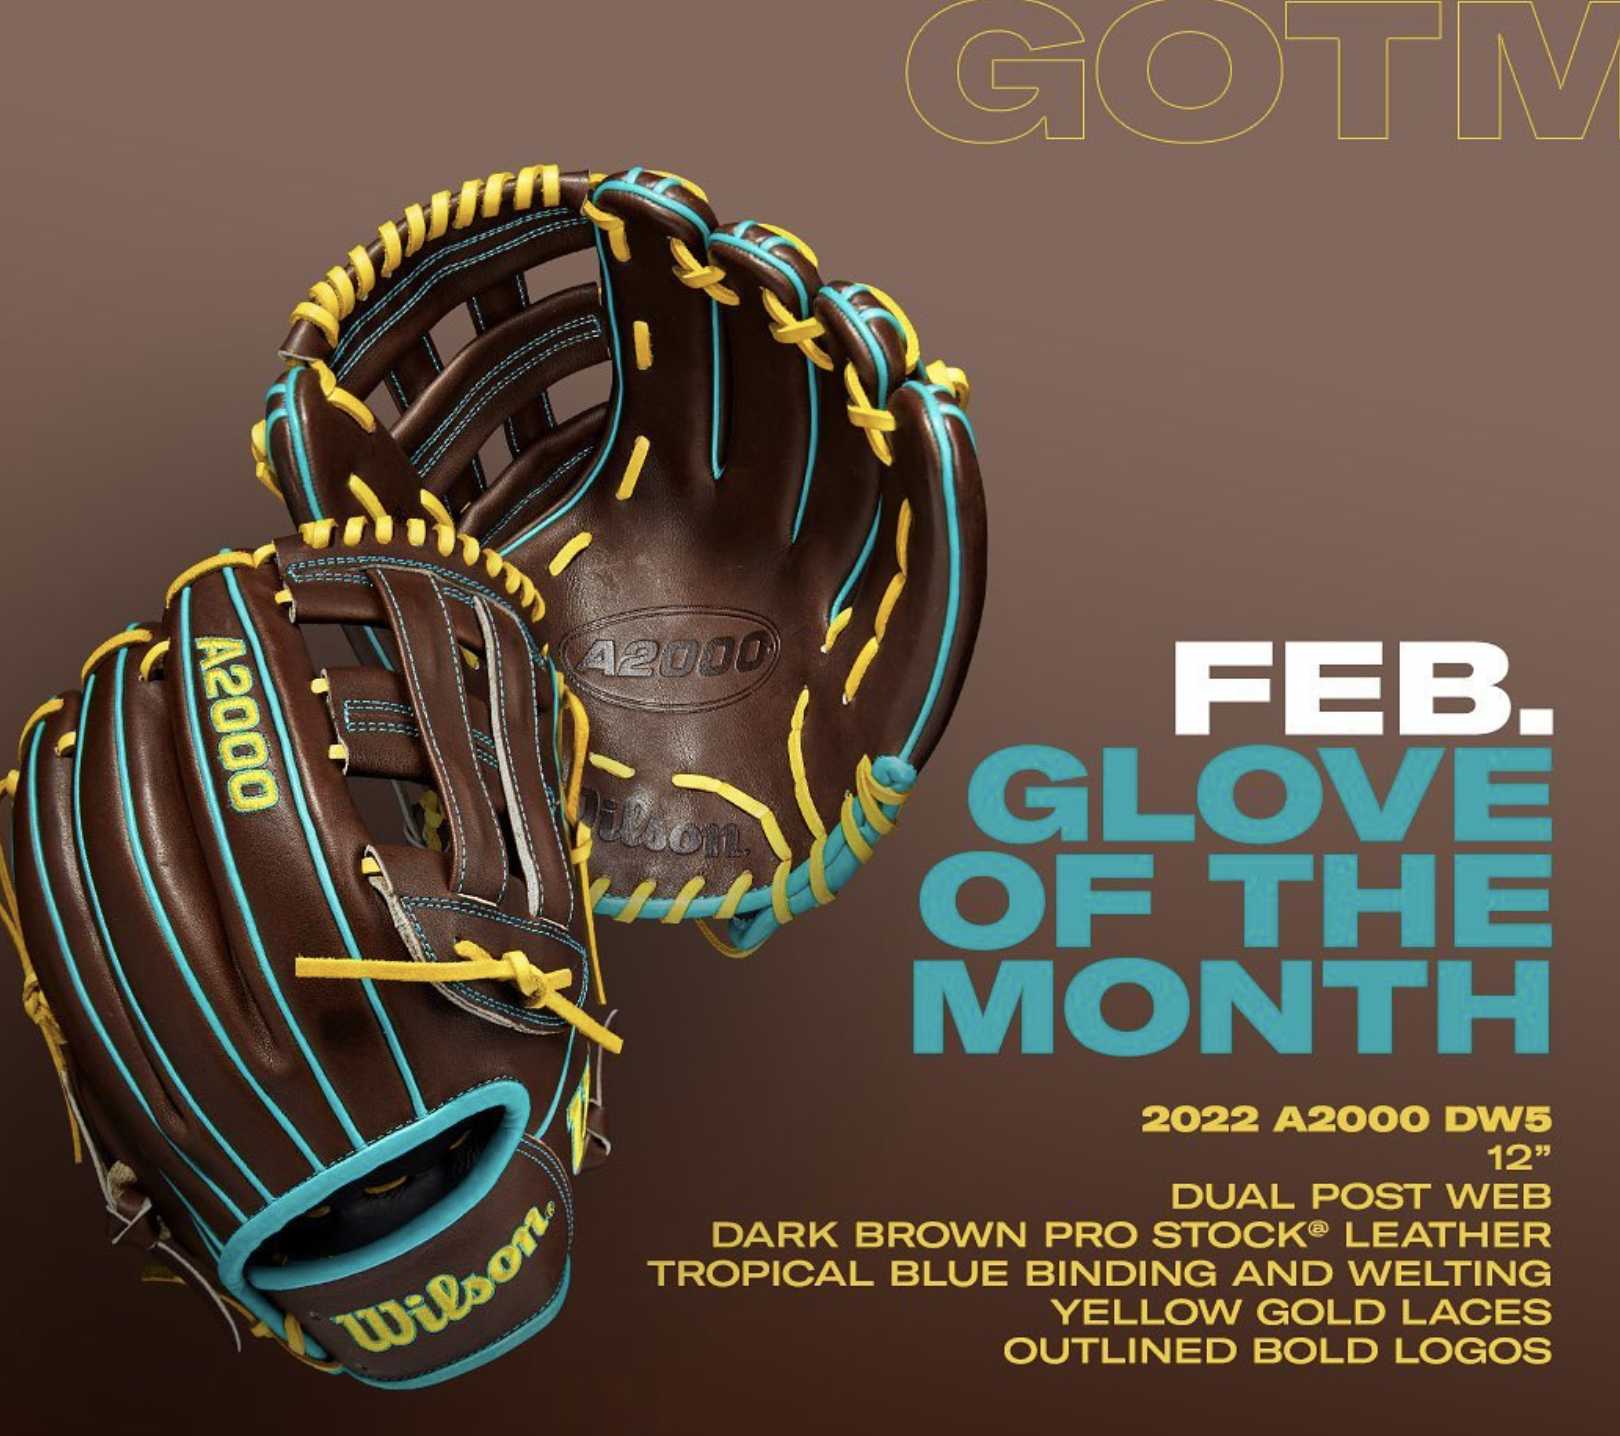 Wilson A2000 February 2022 Glove of the Month (GOTM) DW5 Dark